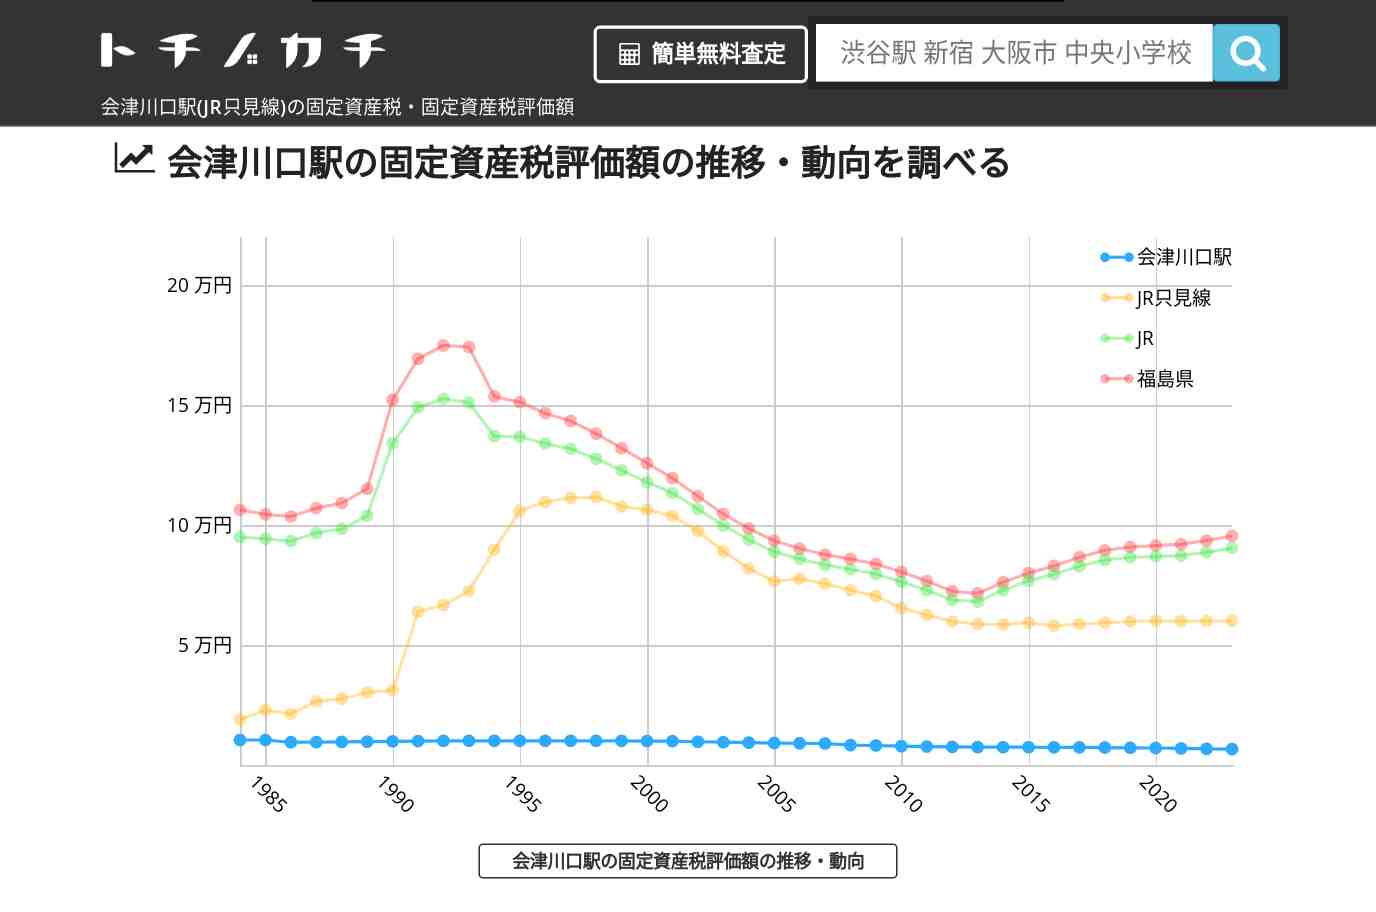 会津川口駅(JR只見線)の固定資産税・固定資産税評価額 | トチノカチ